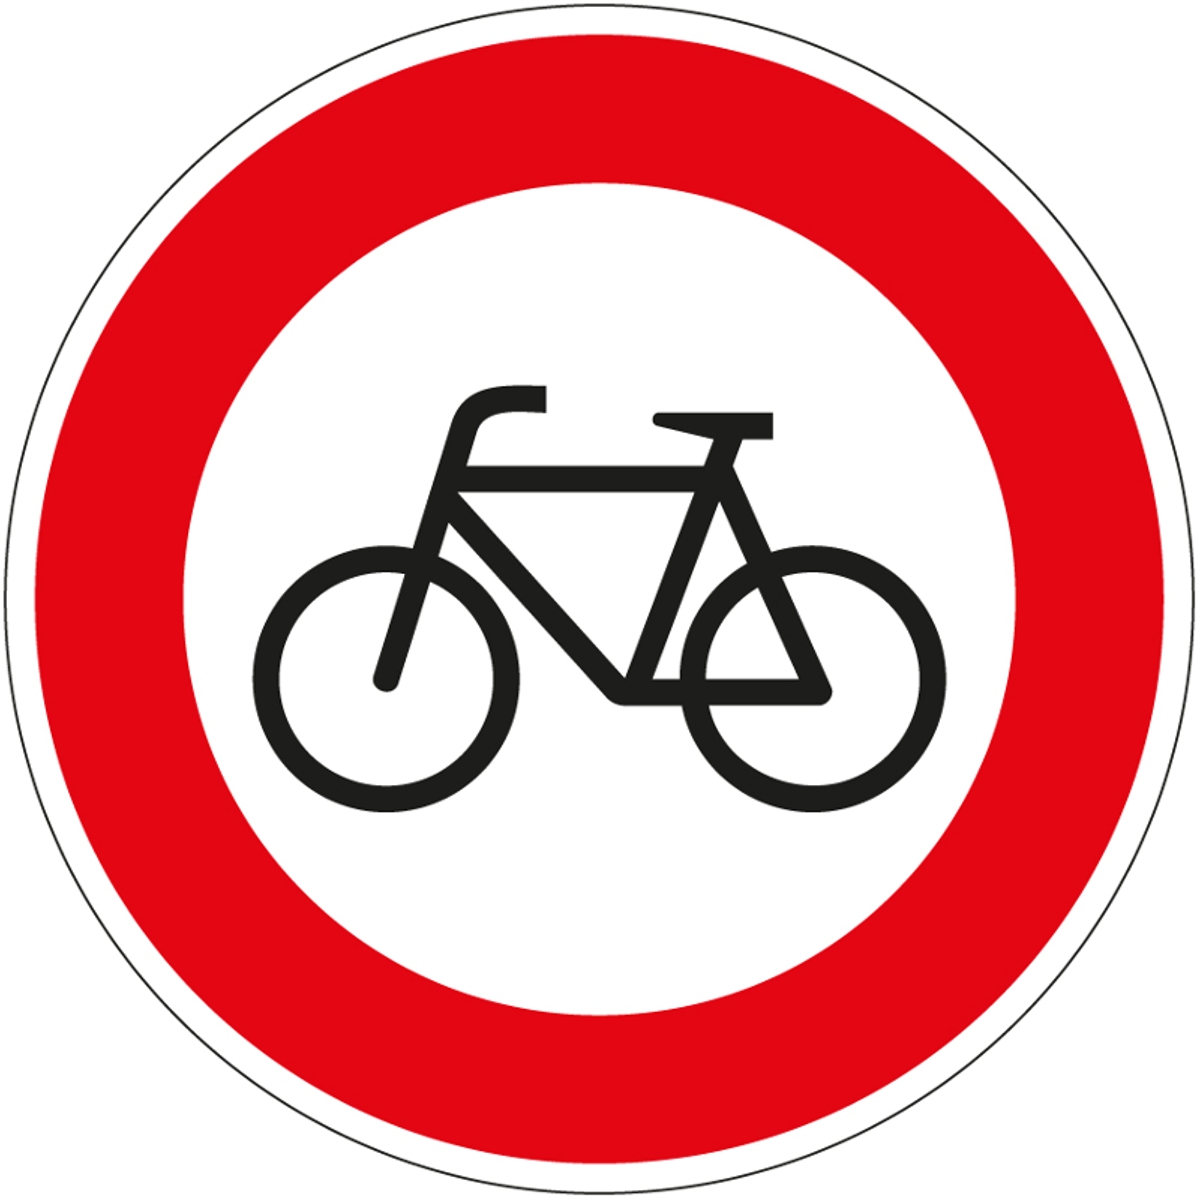 Fahrräder verboten